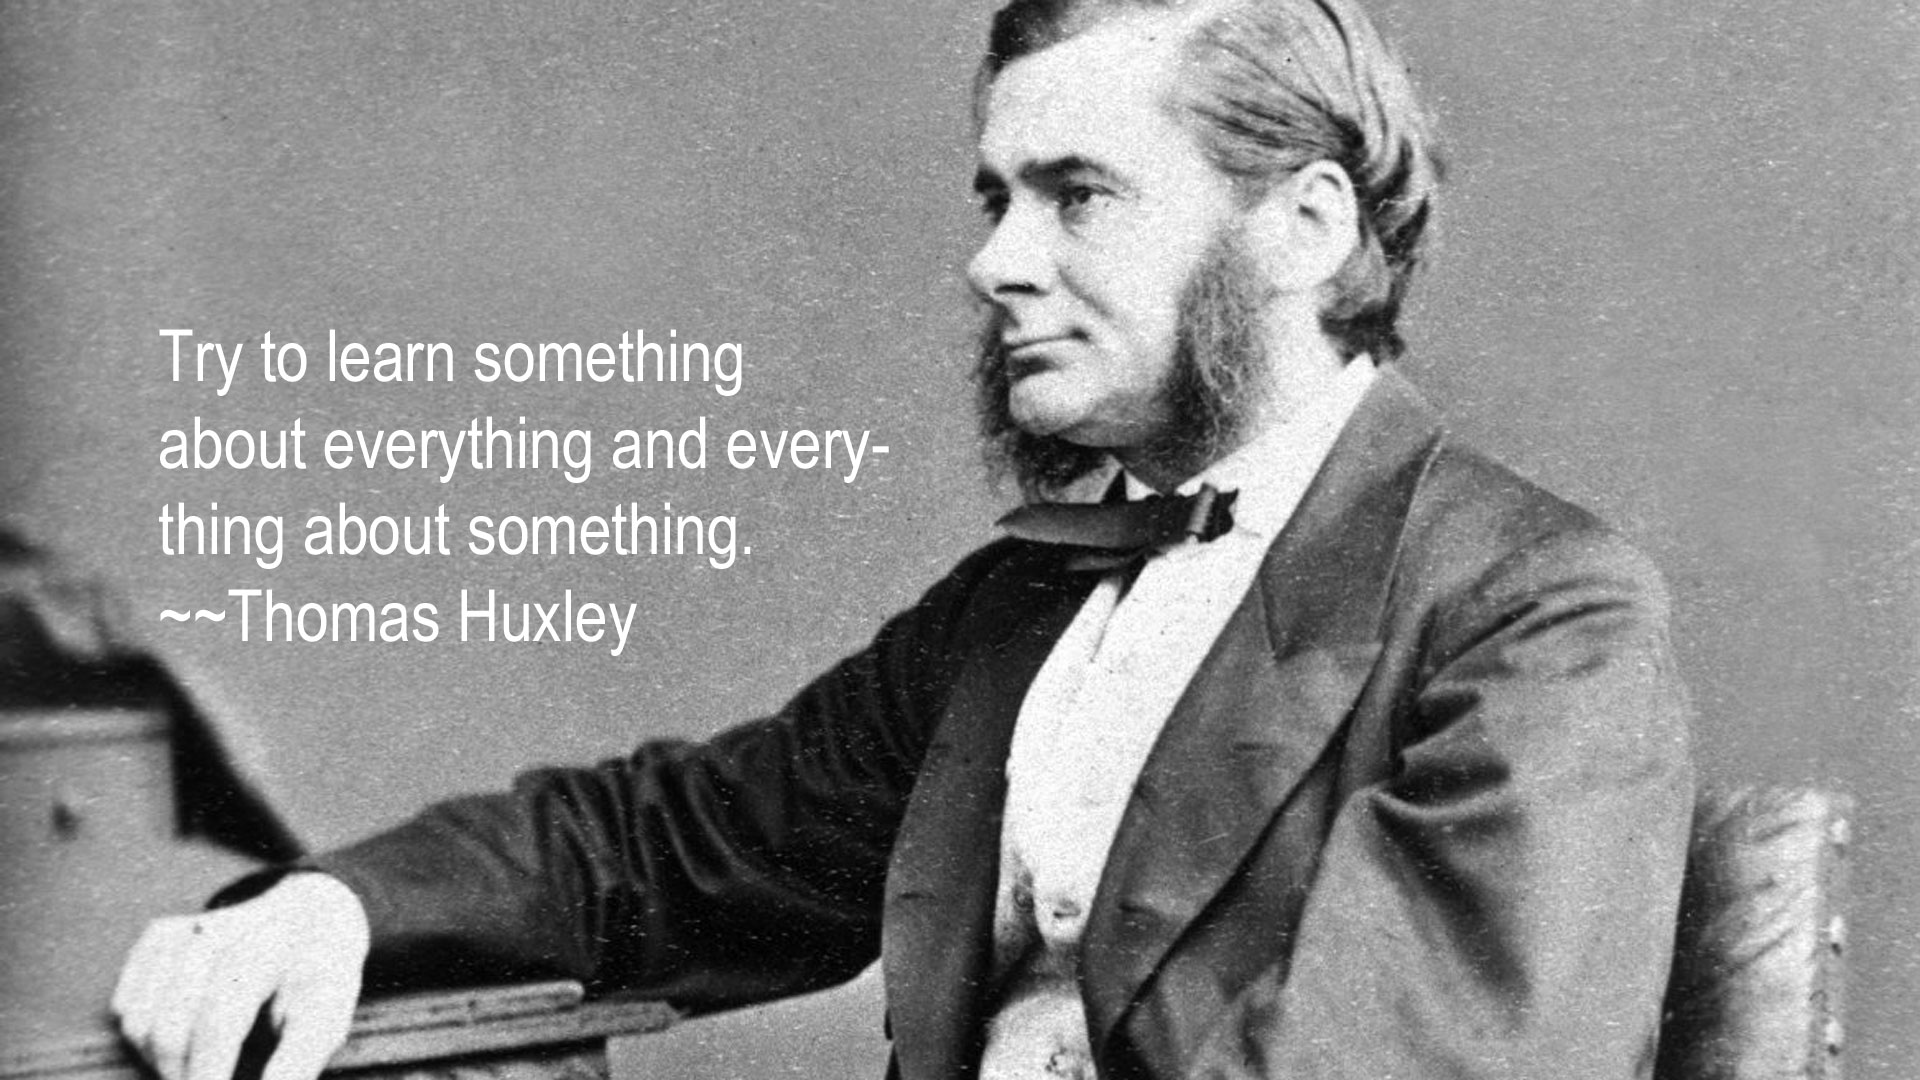 Thomas Huxley's quote #2